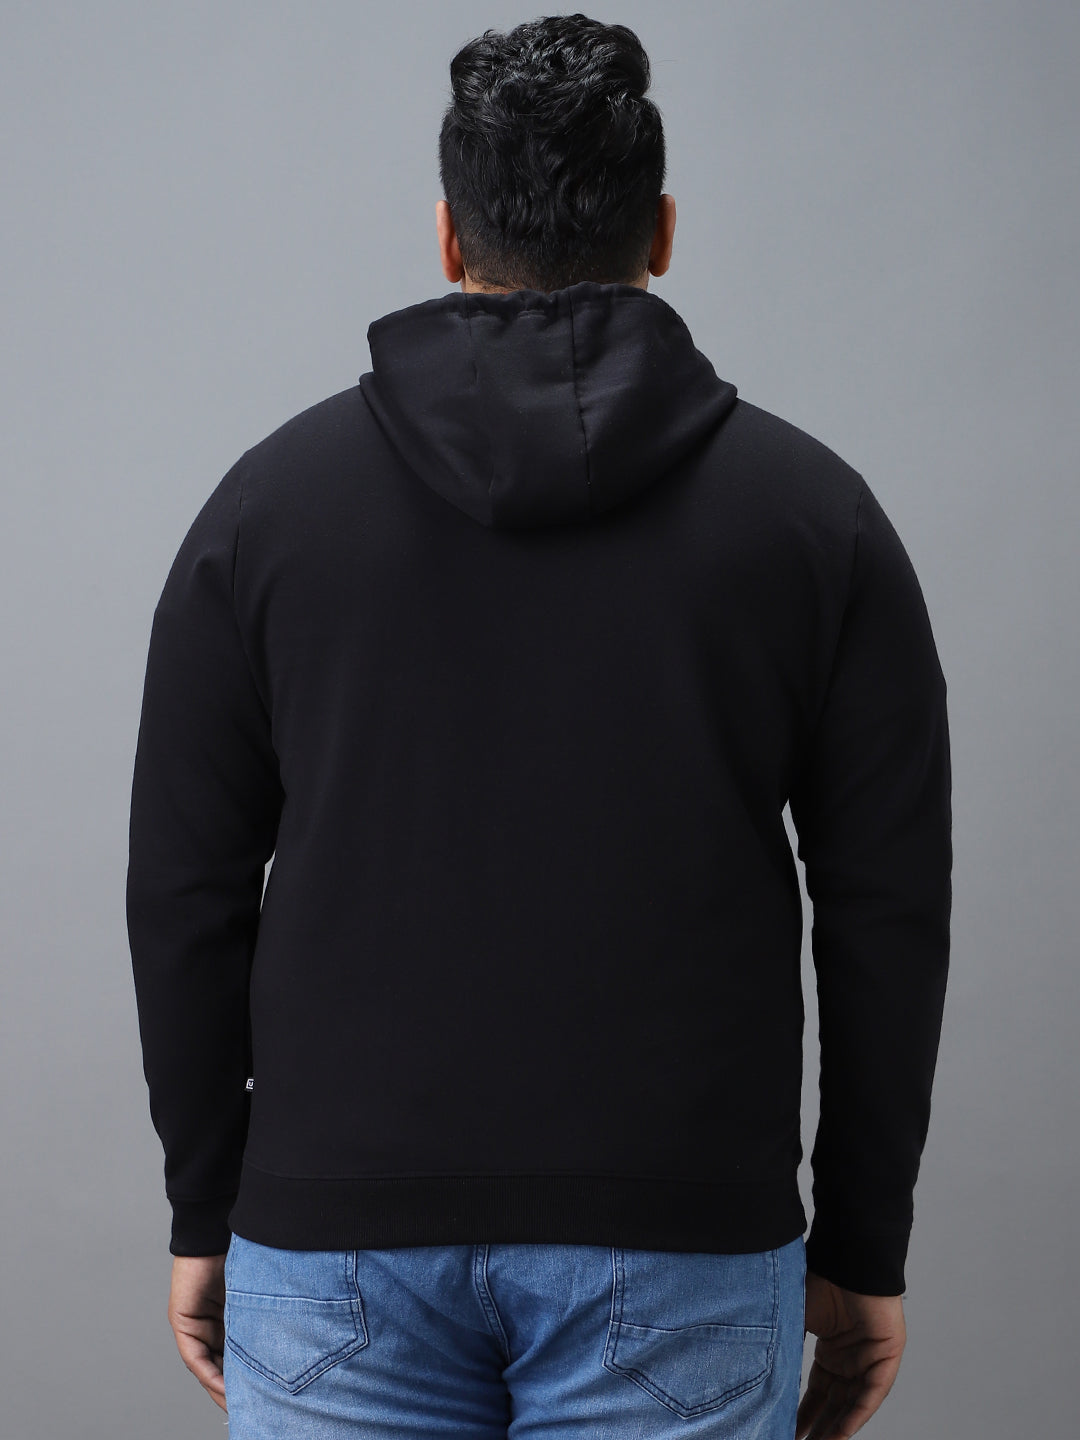 Plus Men's Black Solid Cotton Zippered Full Sleeve Hooded Sweatshirt